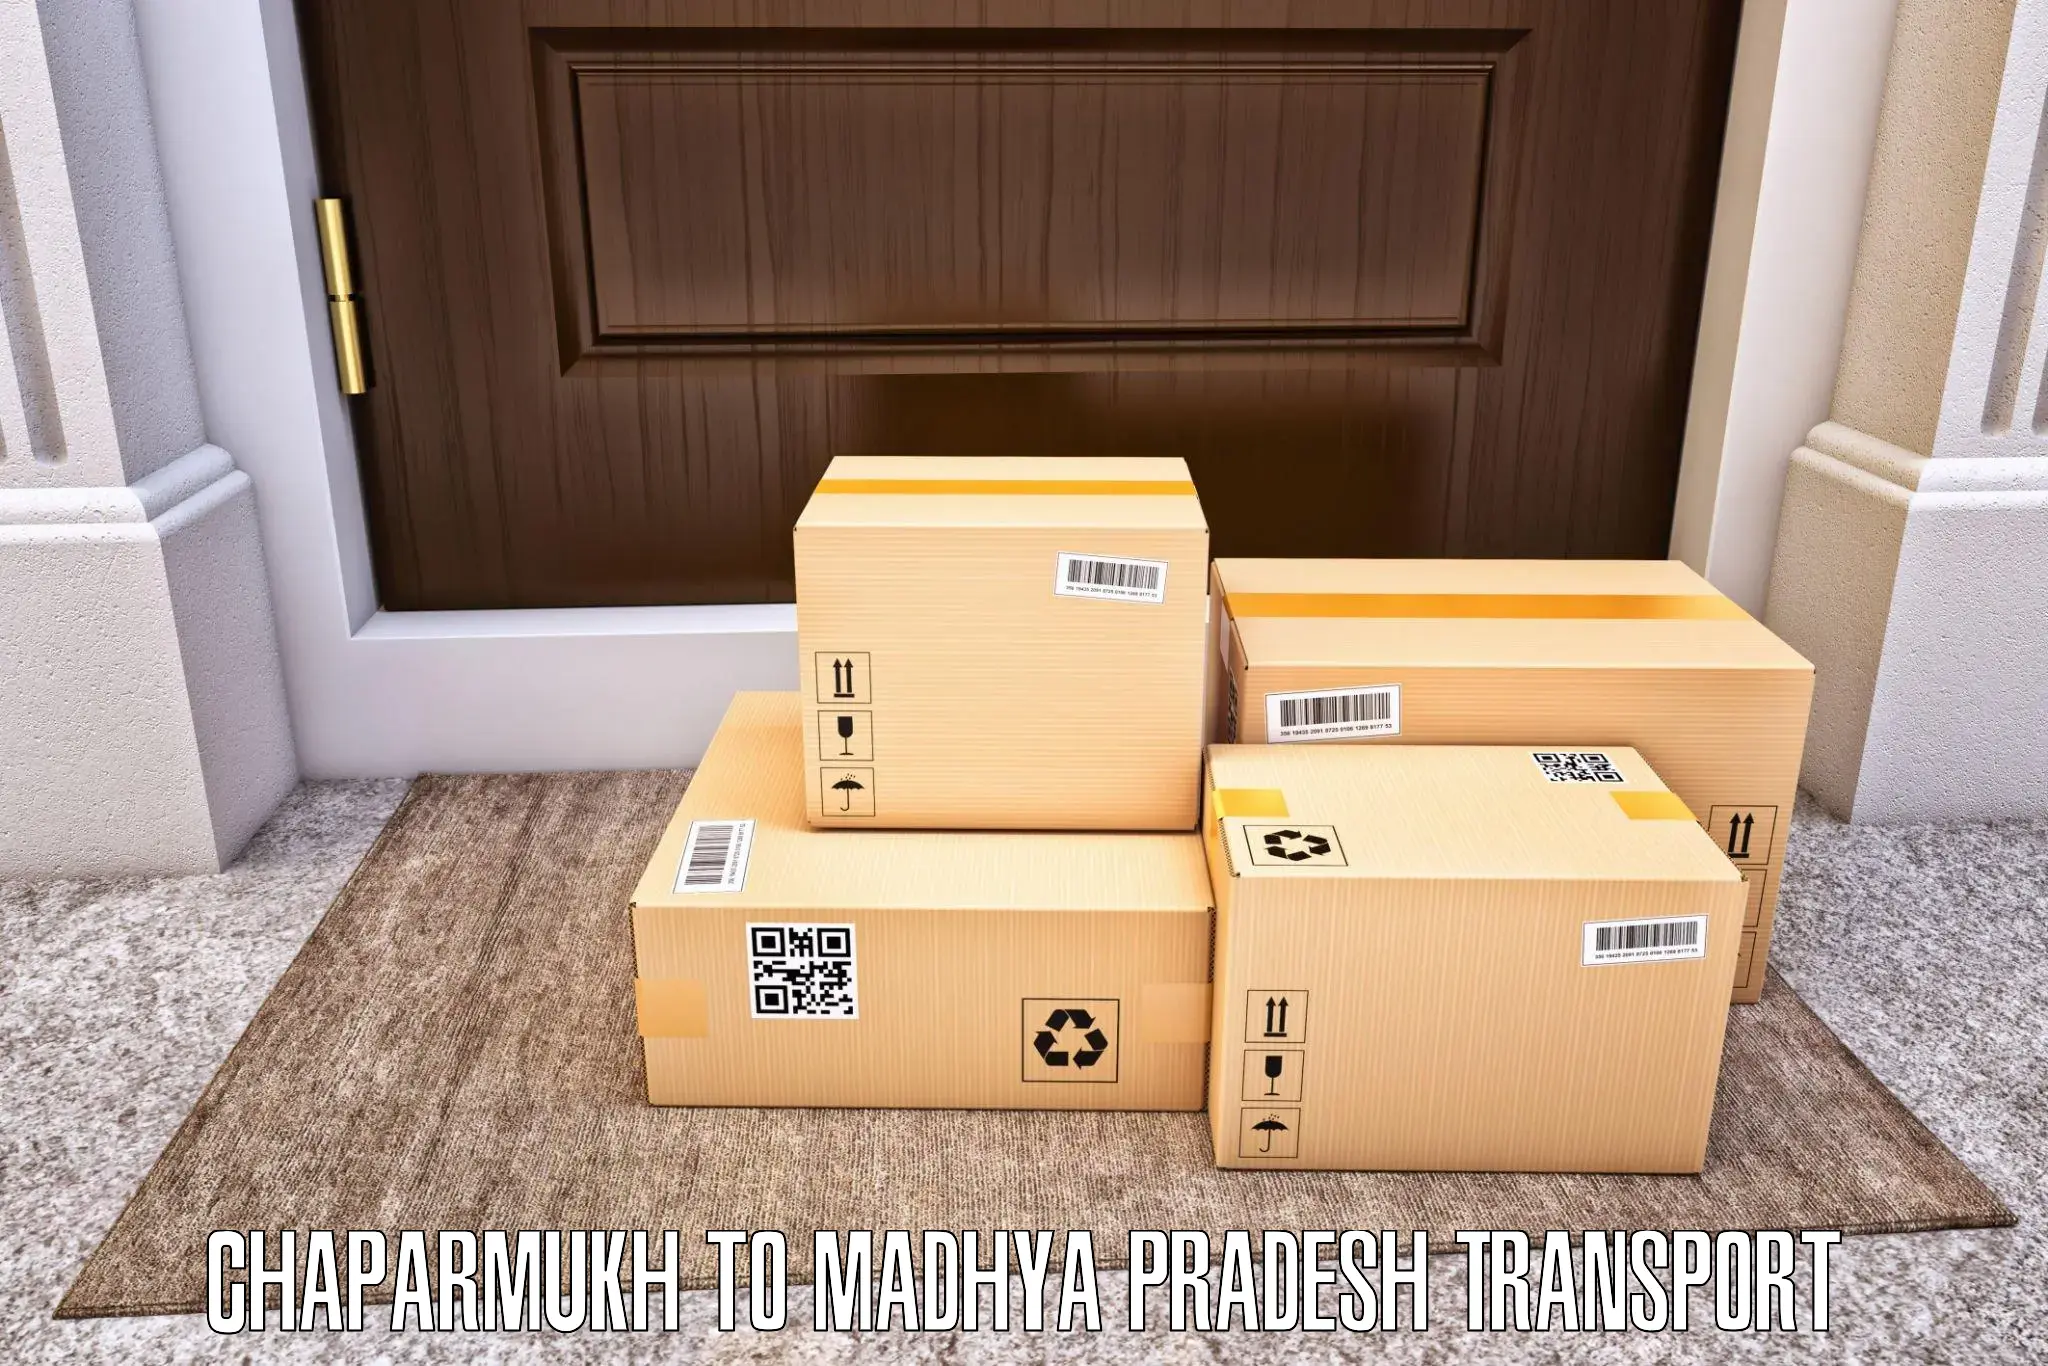 India truck logistics services Chaparmukh to Ashoknagar